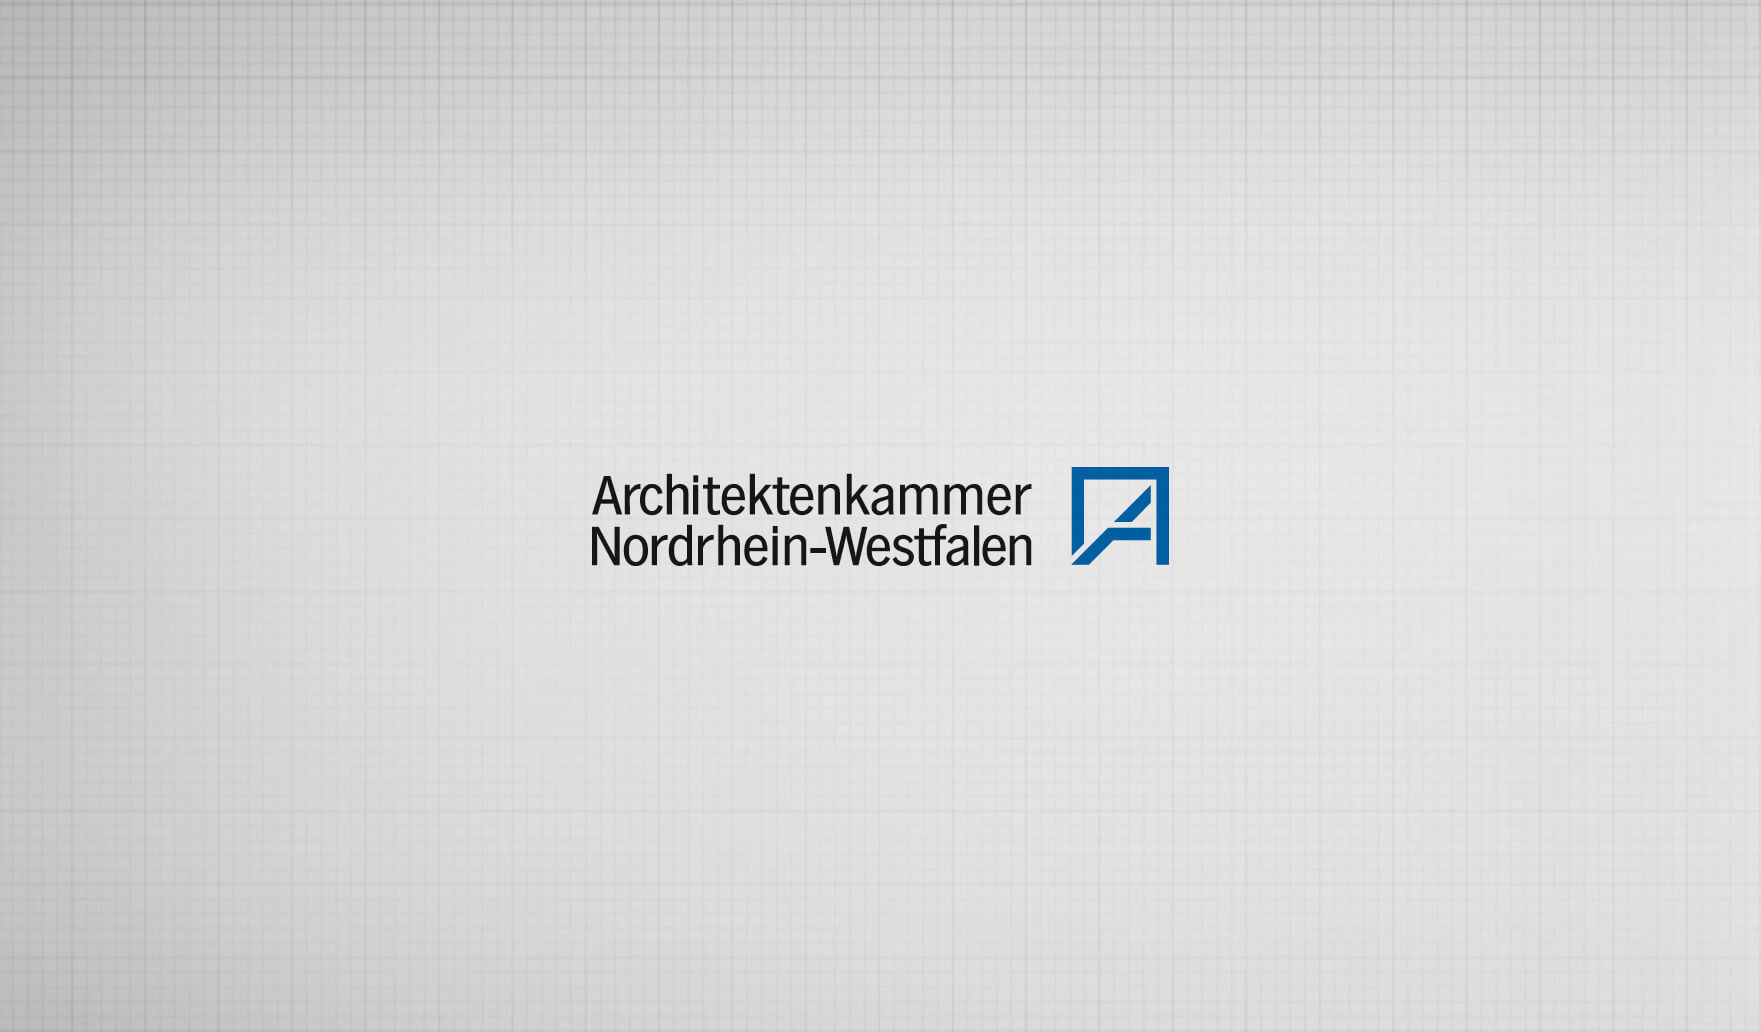 Architektenkammer NRW Imagefilm KOMMUNIKATION LOHNZICH